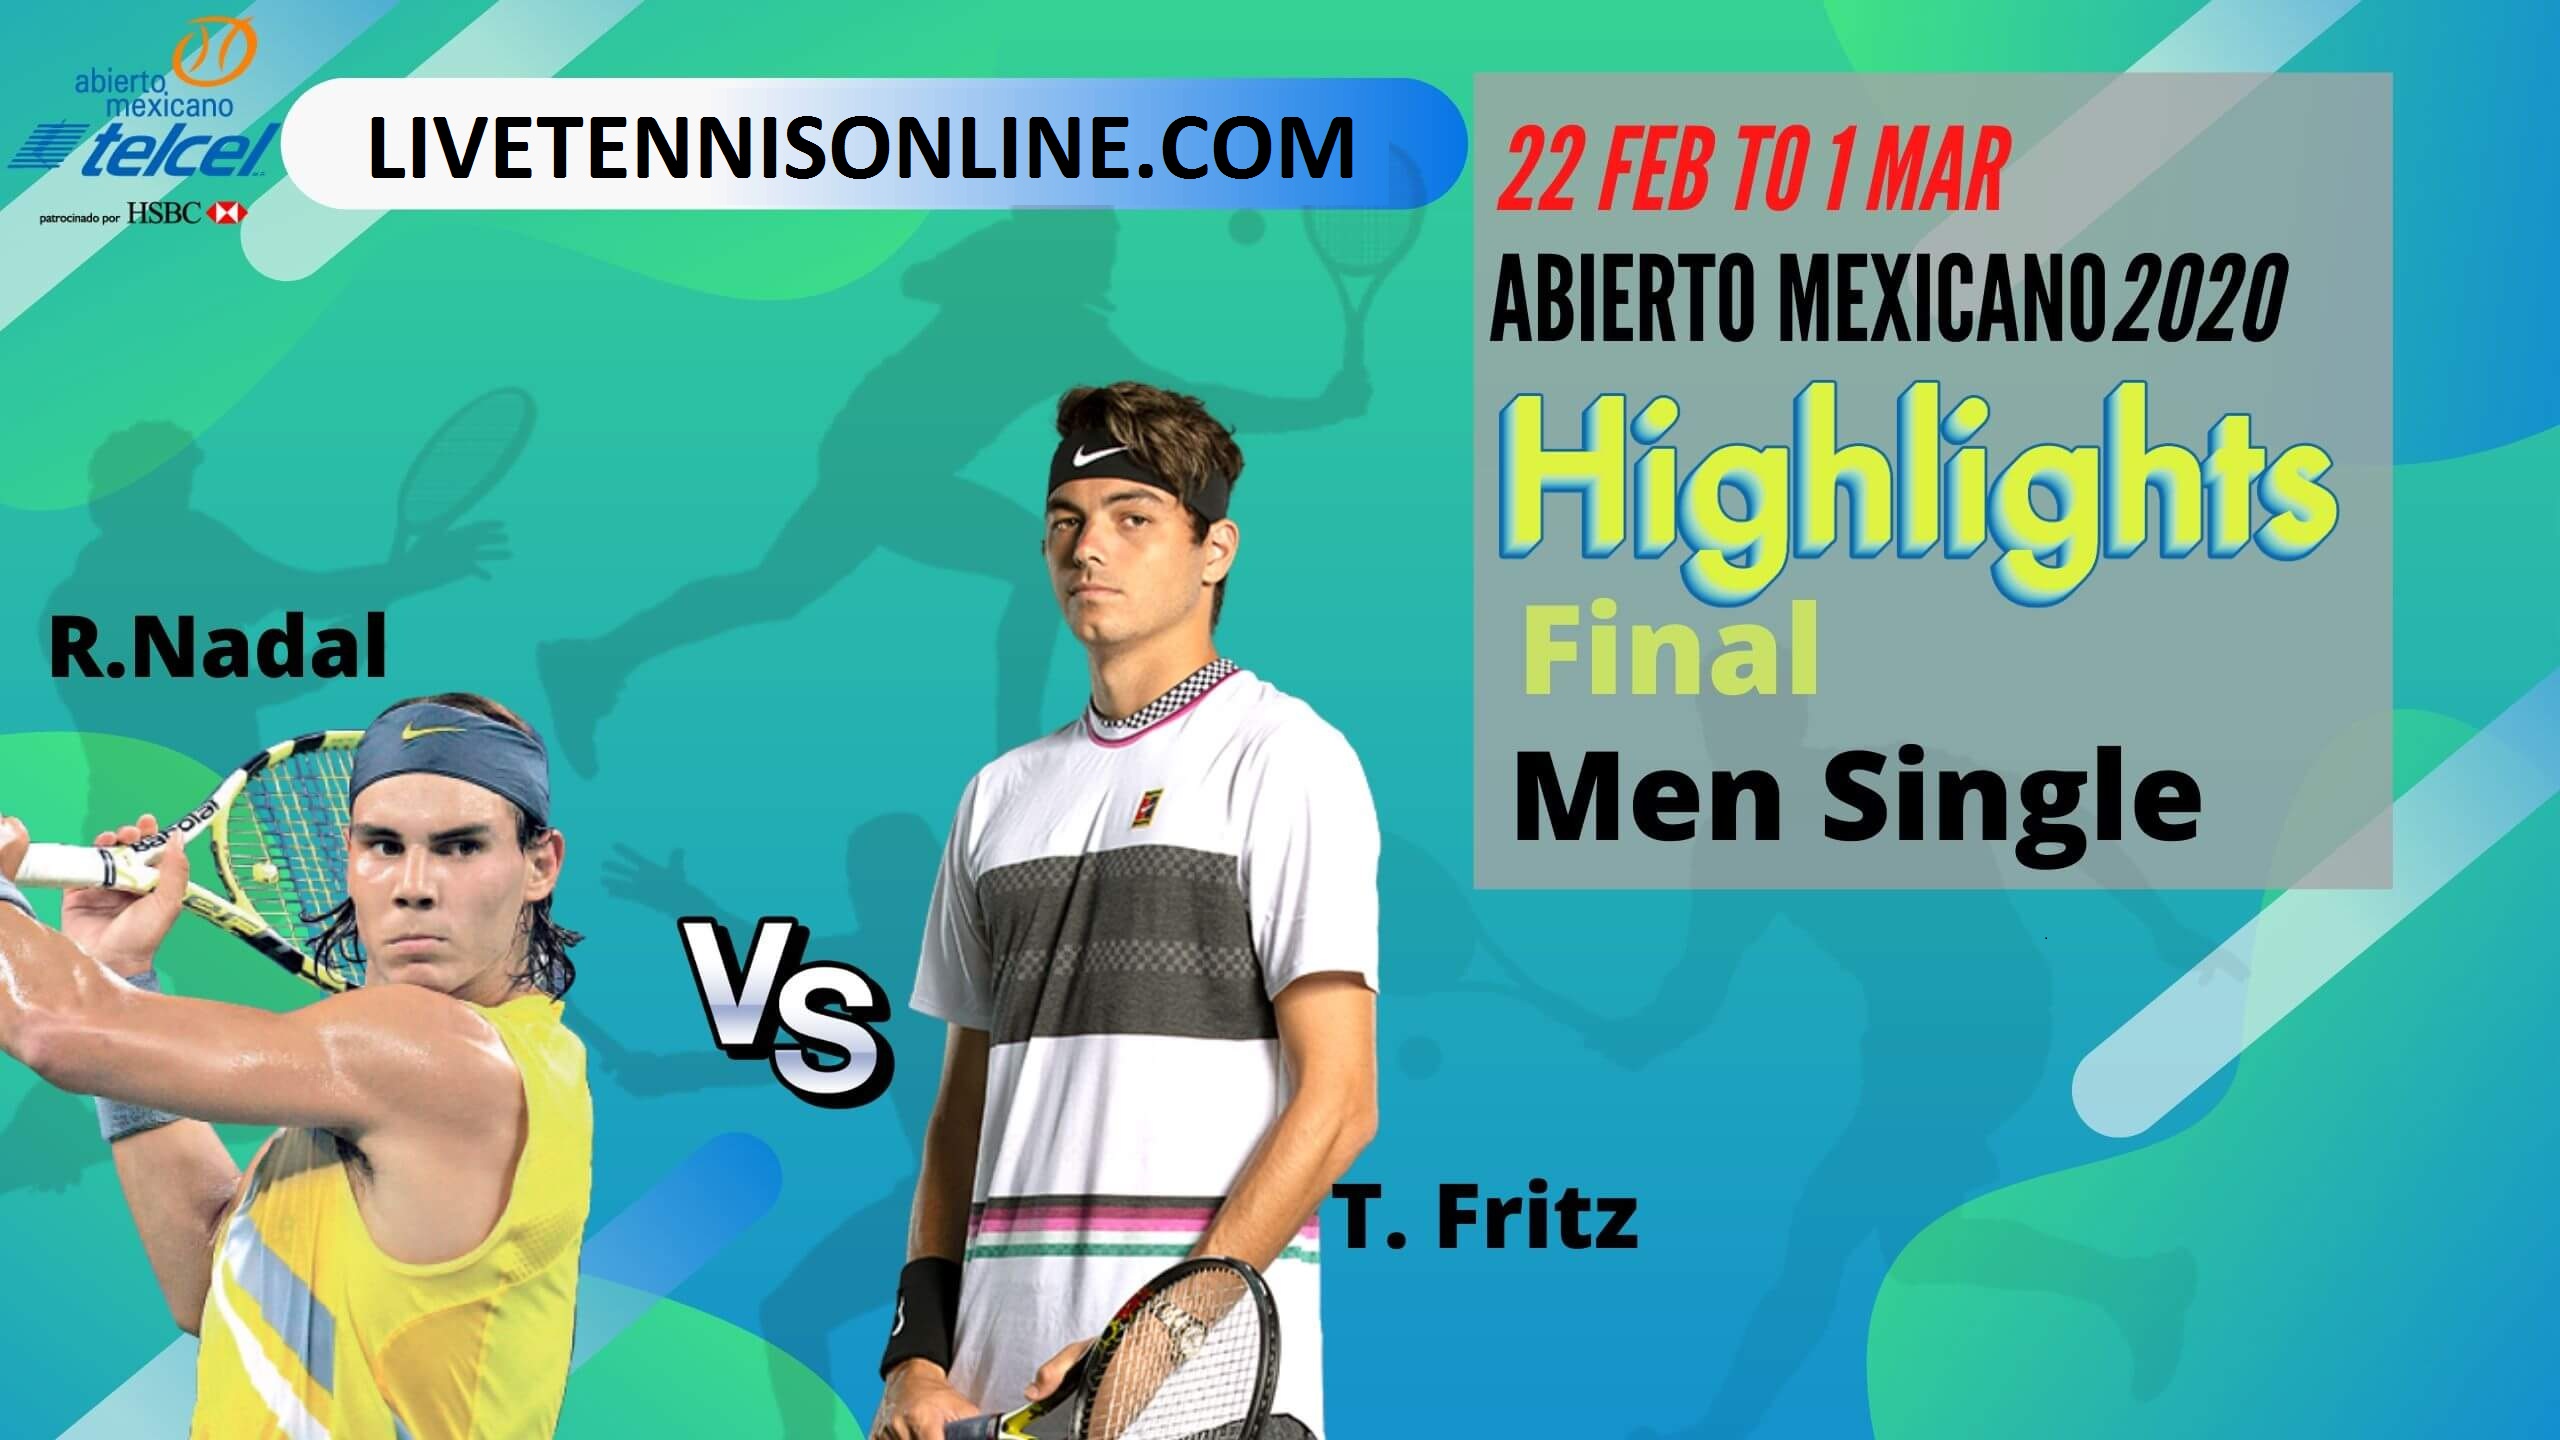 T Fritz Vs R Nadal Final Highlights 2020 | Abierto Mexican